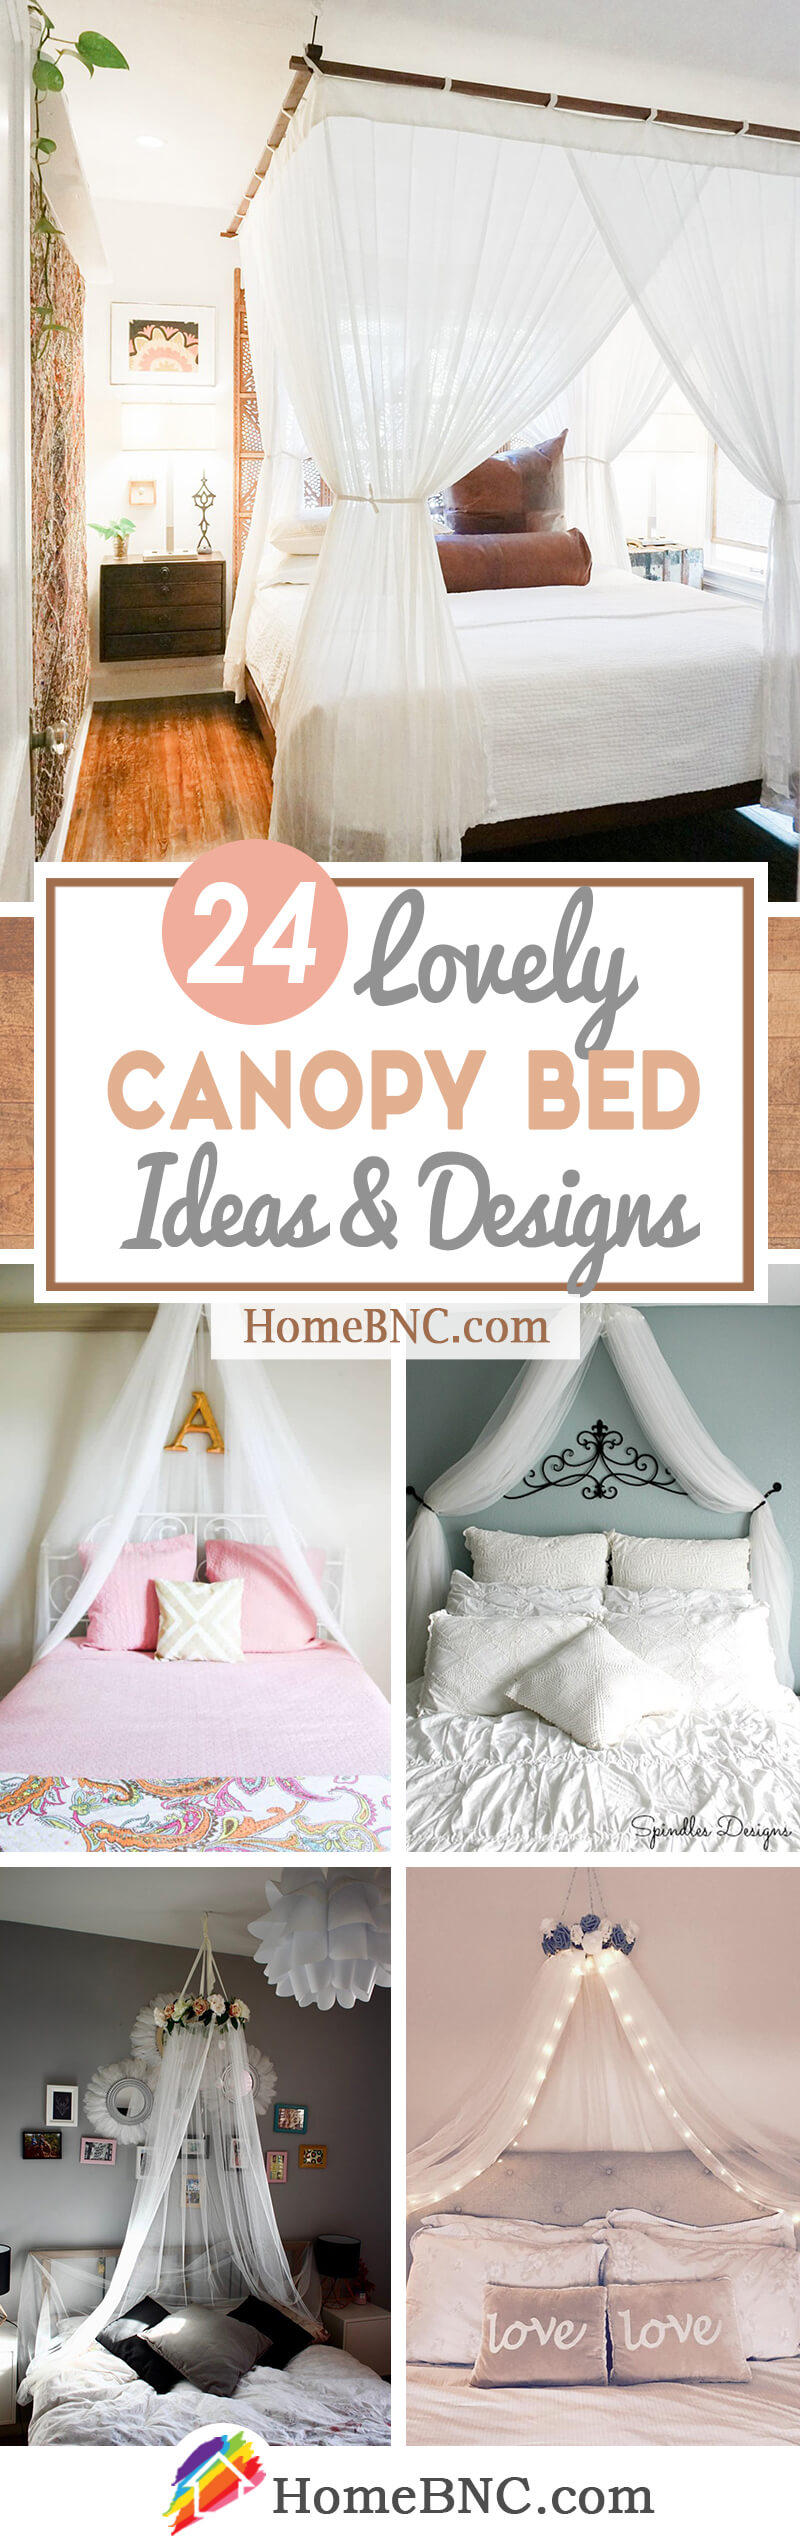 Canopy Bed Designs Homebnc